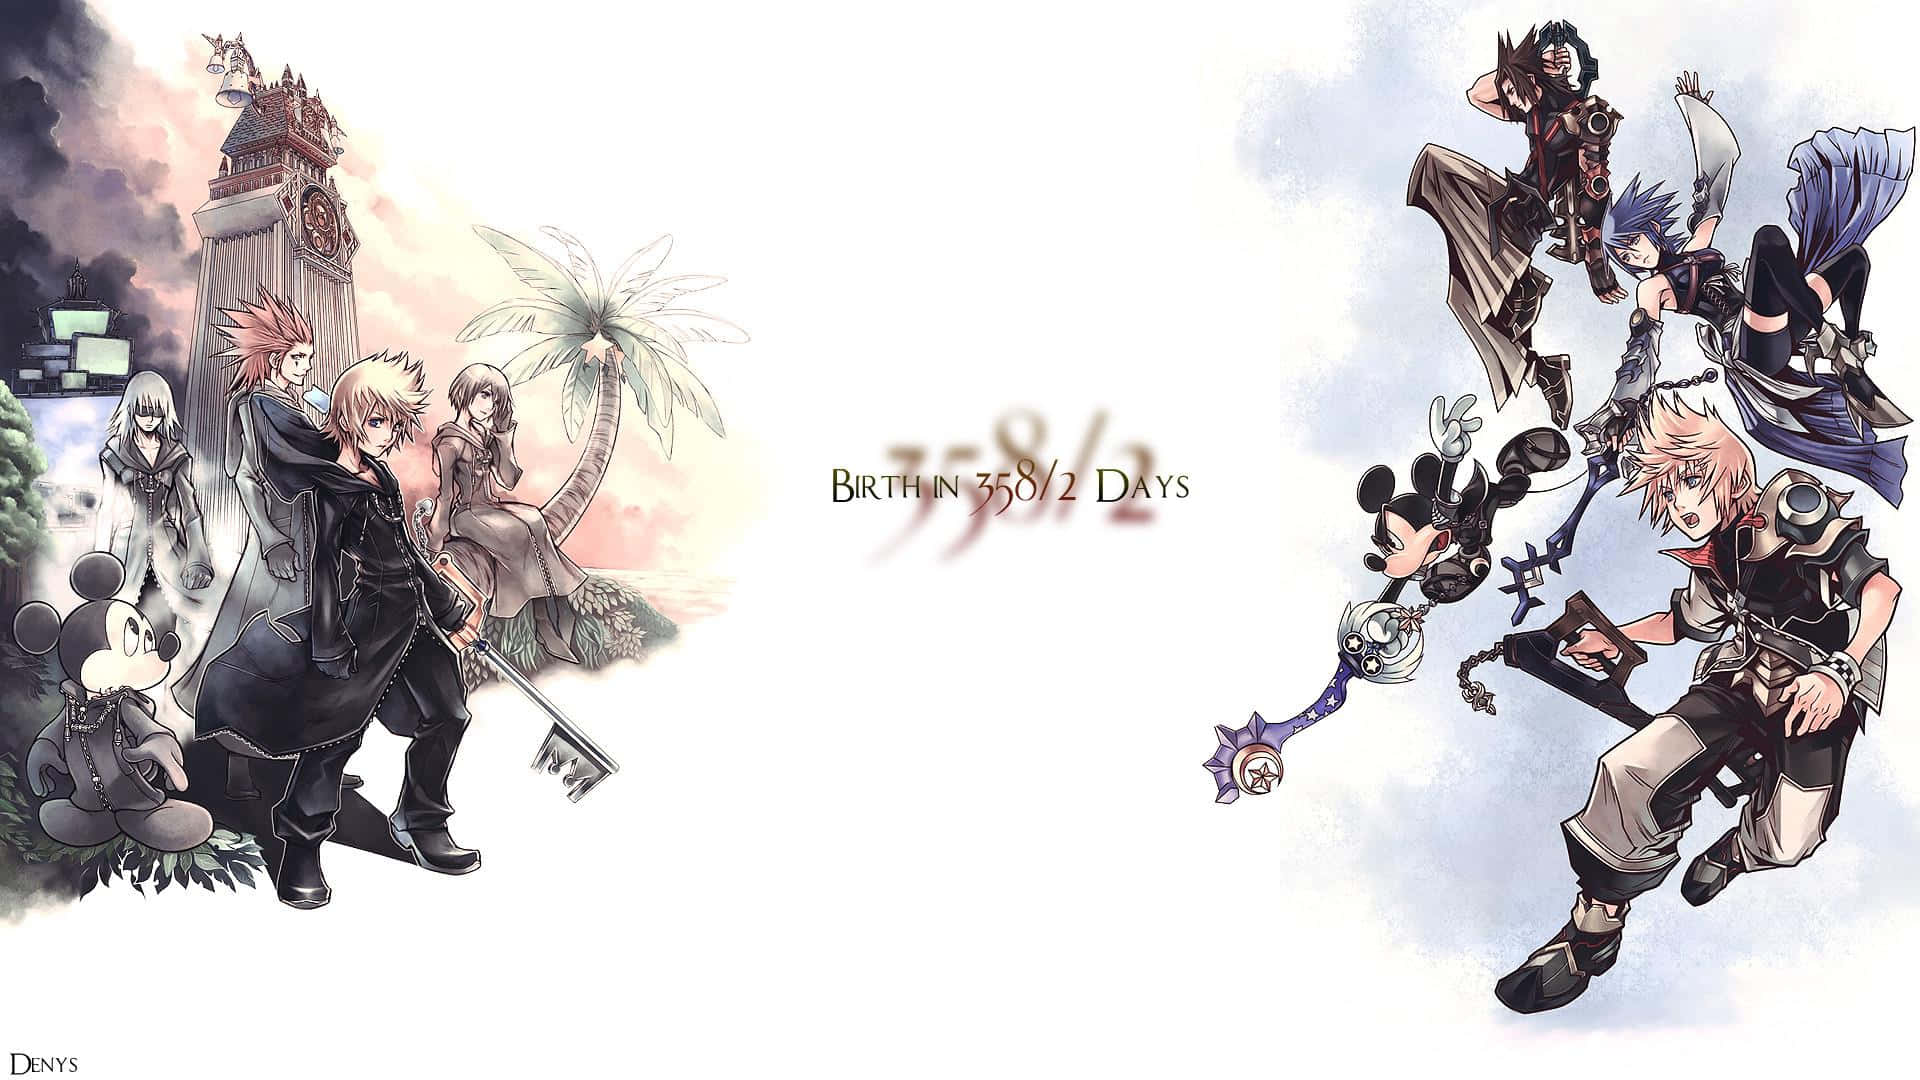 Riku wielding his Keyblade in the mystical Kingdom Hearts universe Wallpaper